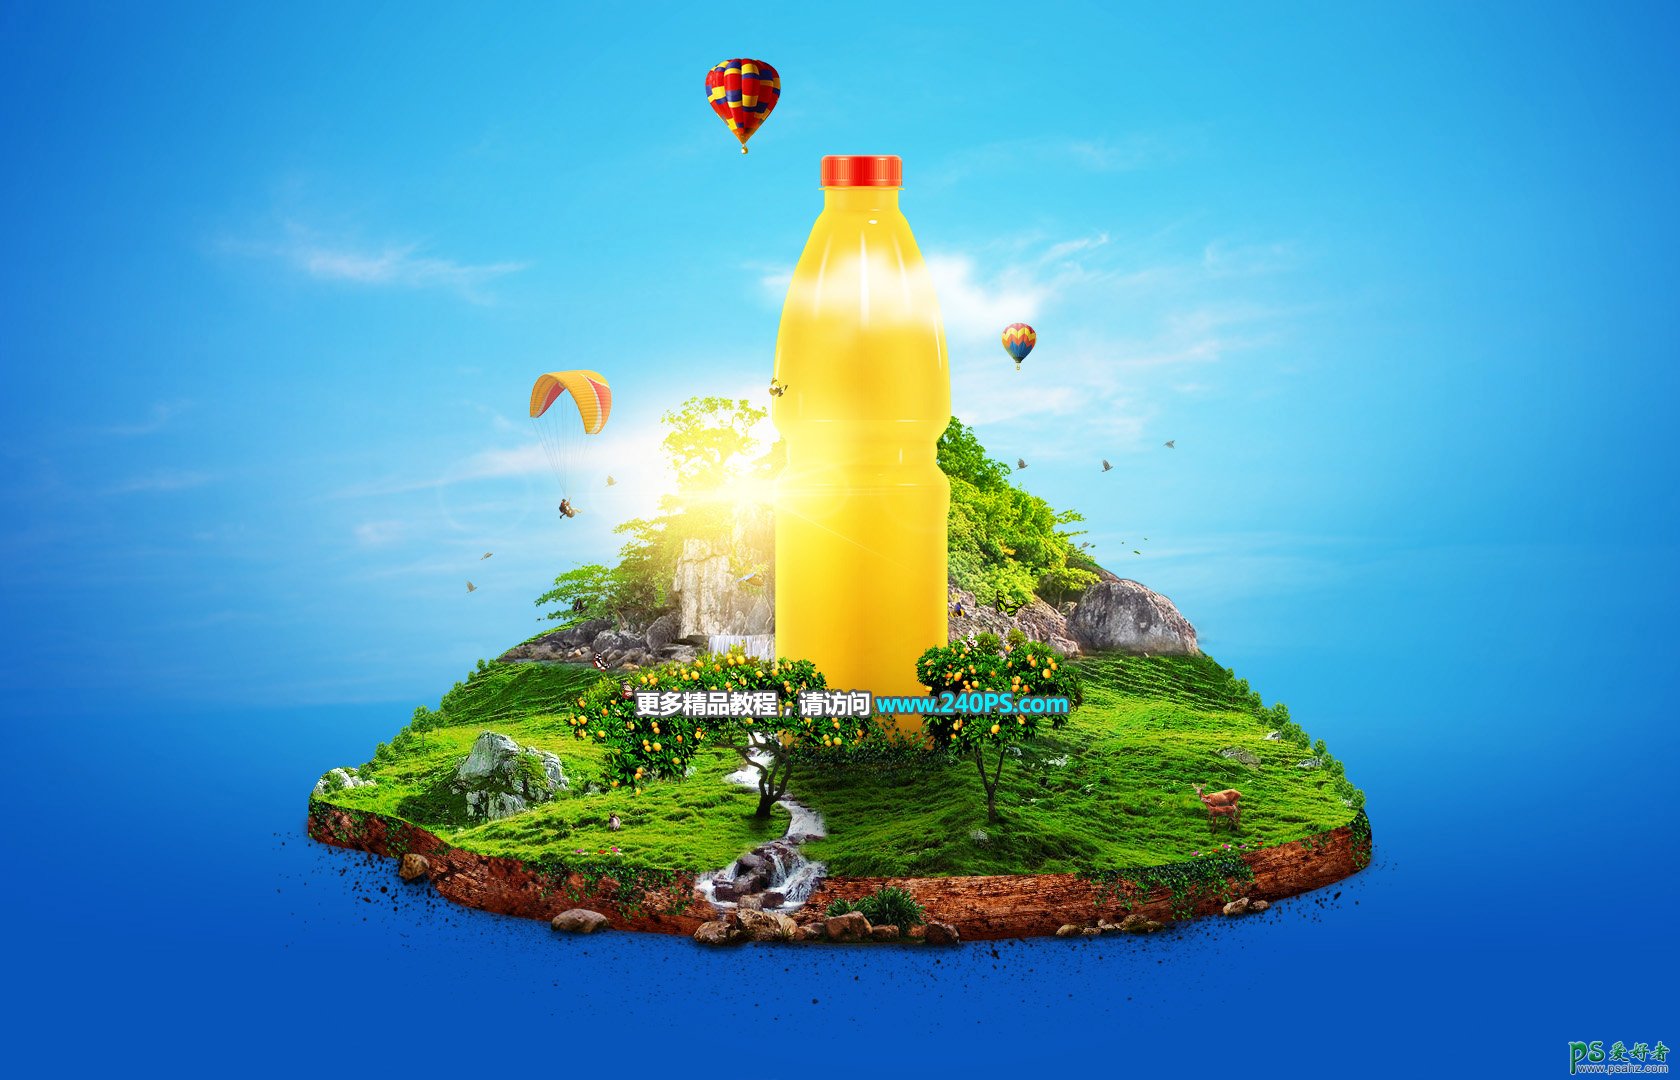 PS图片合成教程：创意合成纯净生态山水景观果汁饮料海报图片。